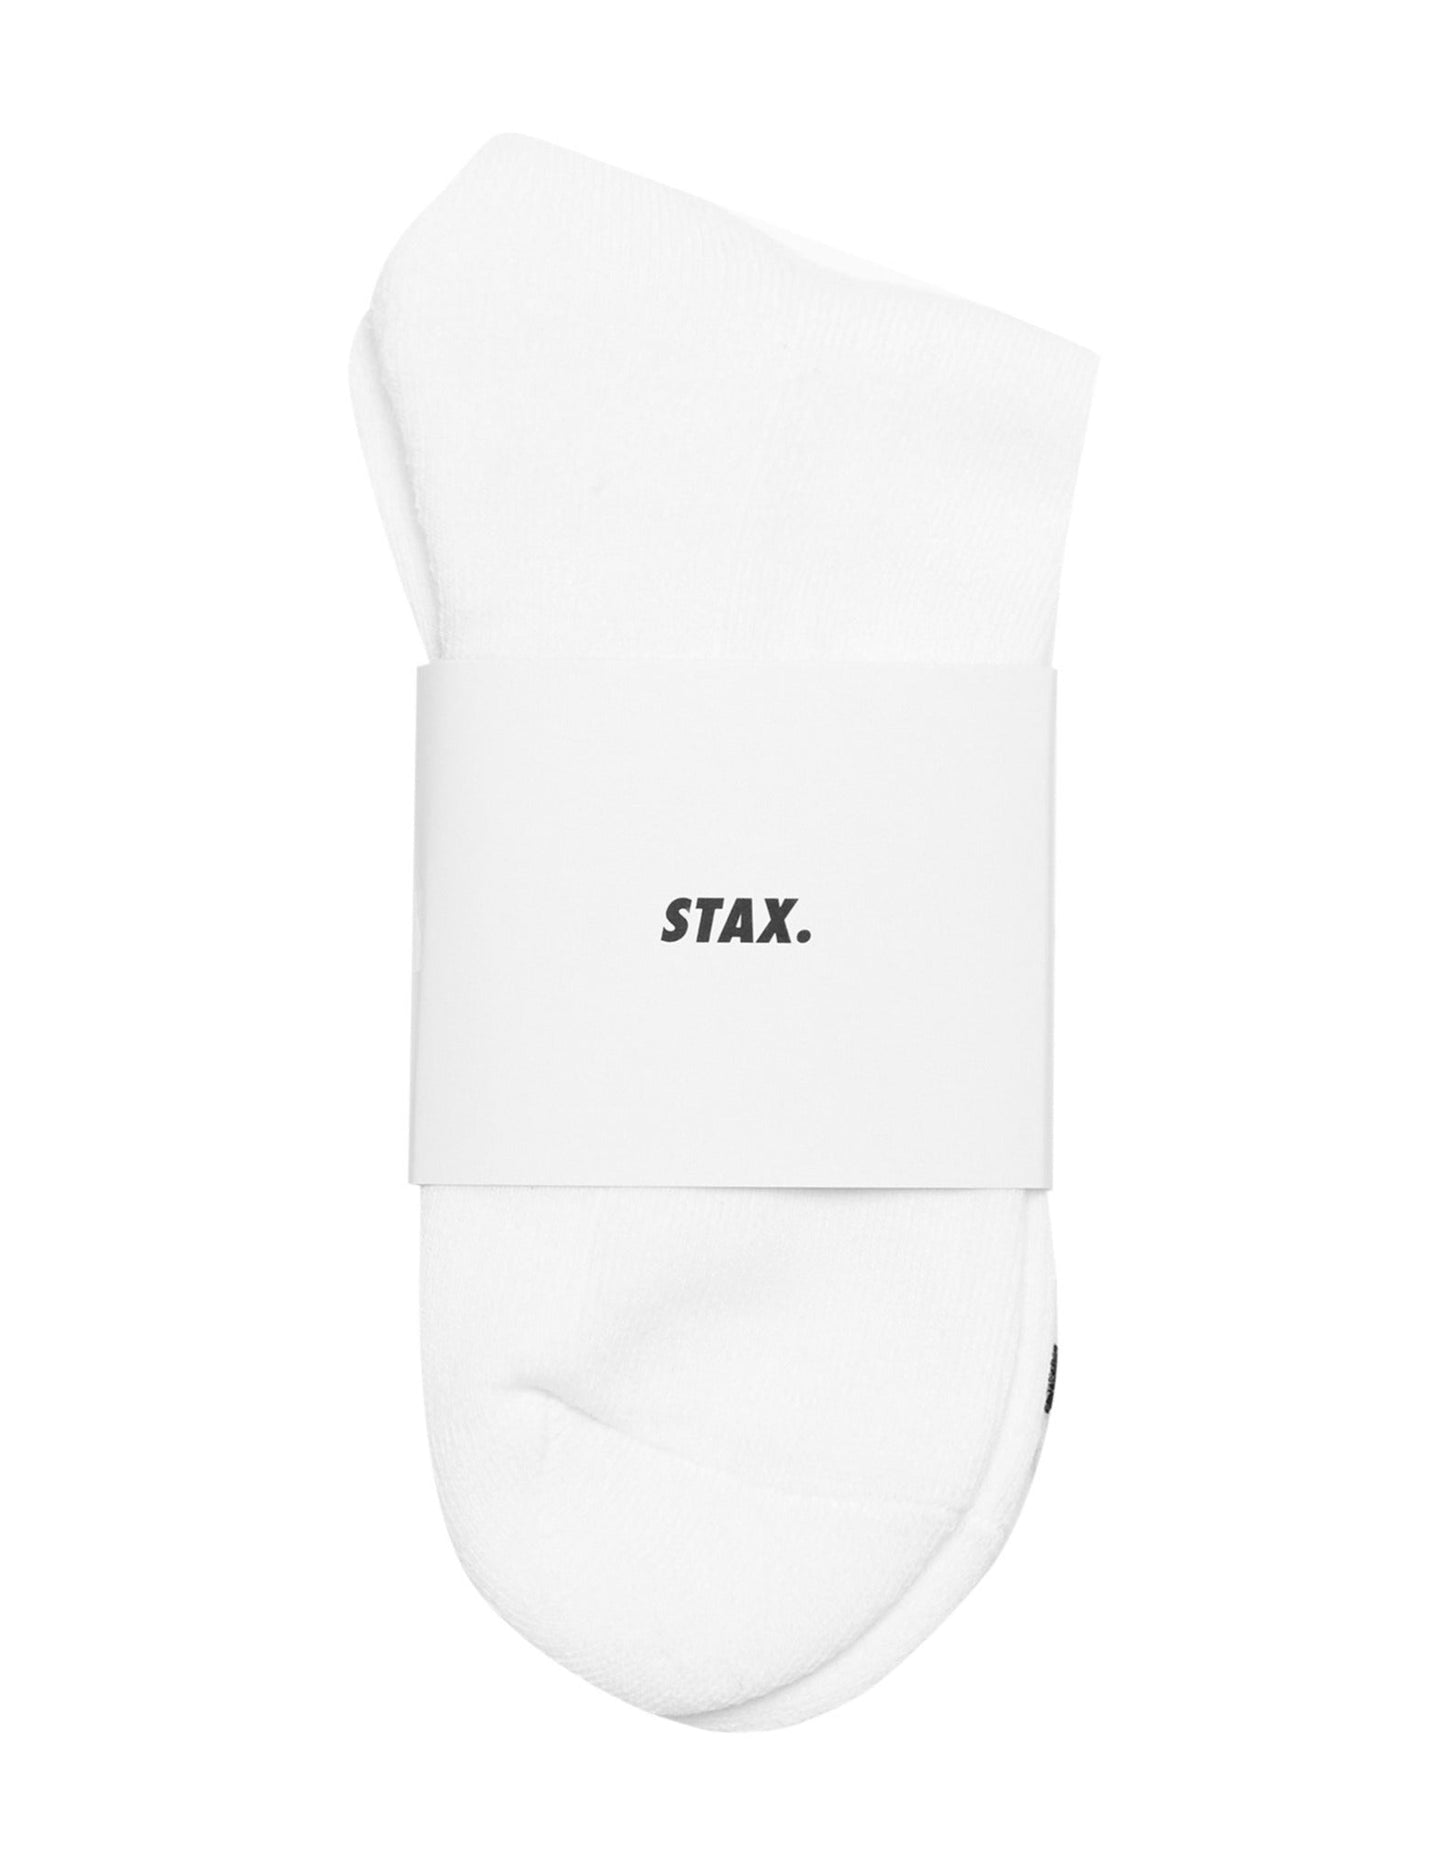 STAX. Unisex Crew Socks - White